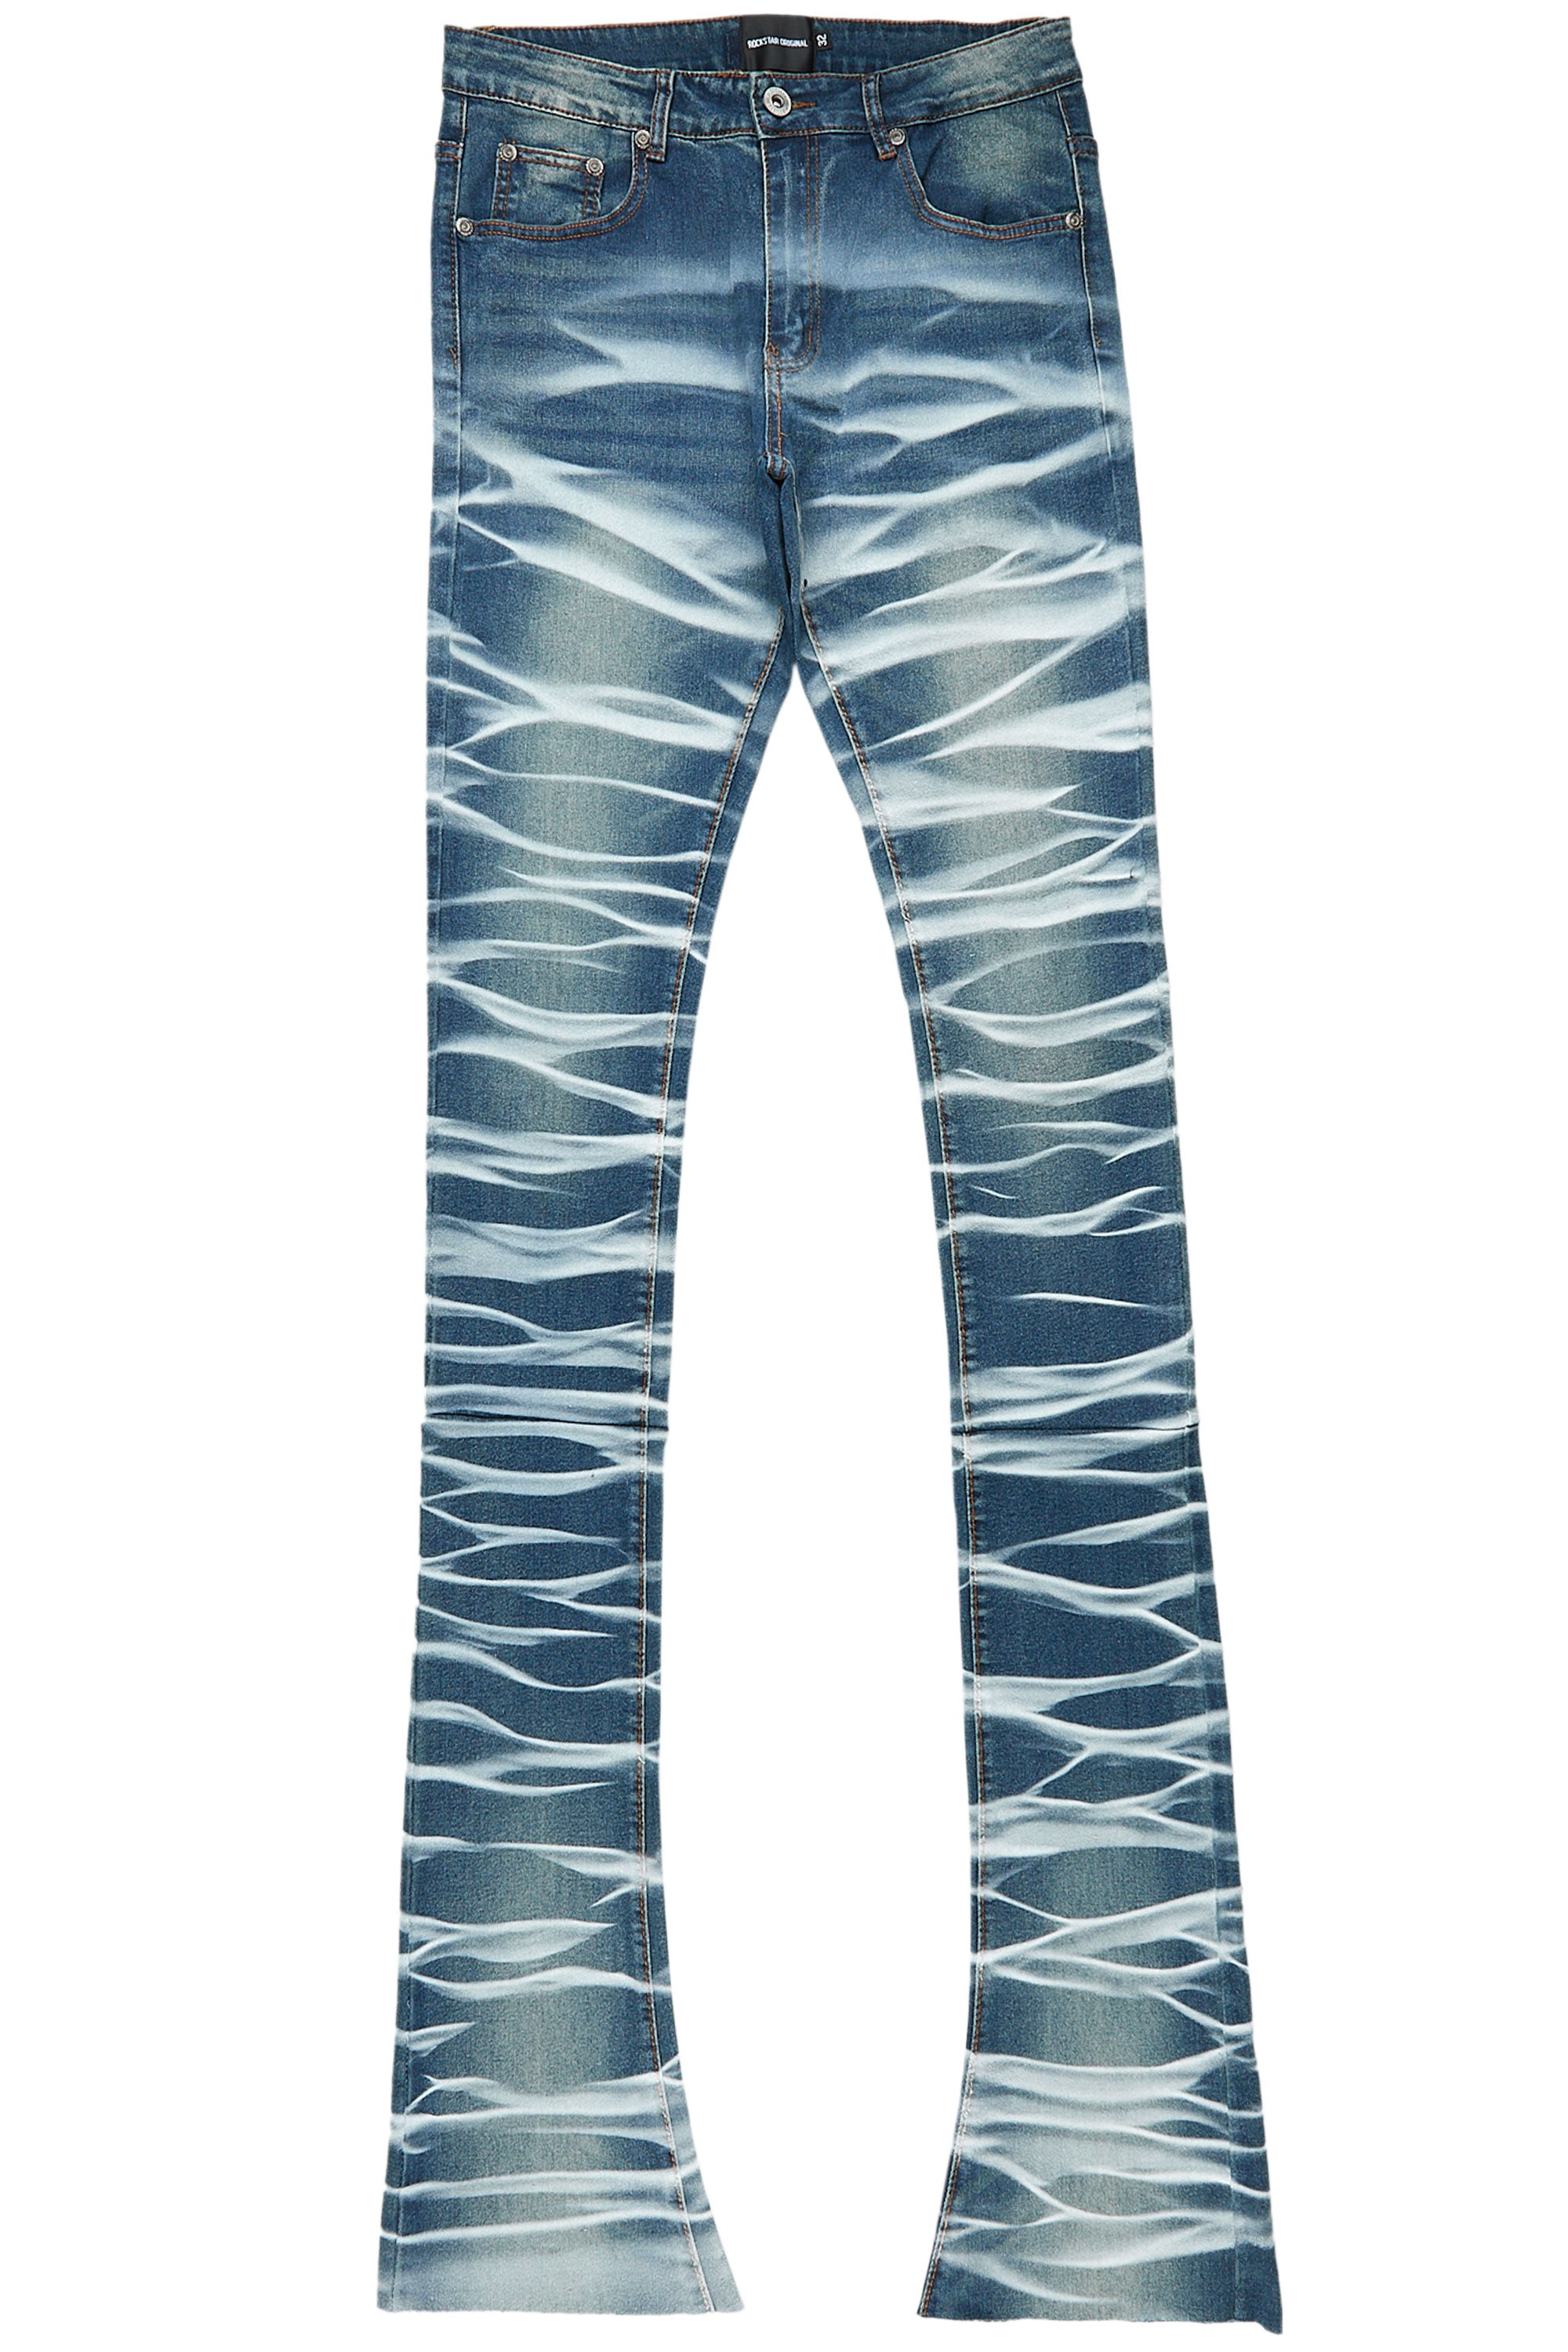 Ayden Vintage/White Super Stacked Flare Jean